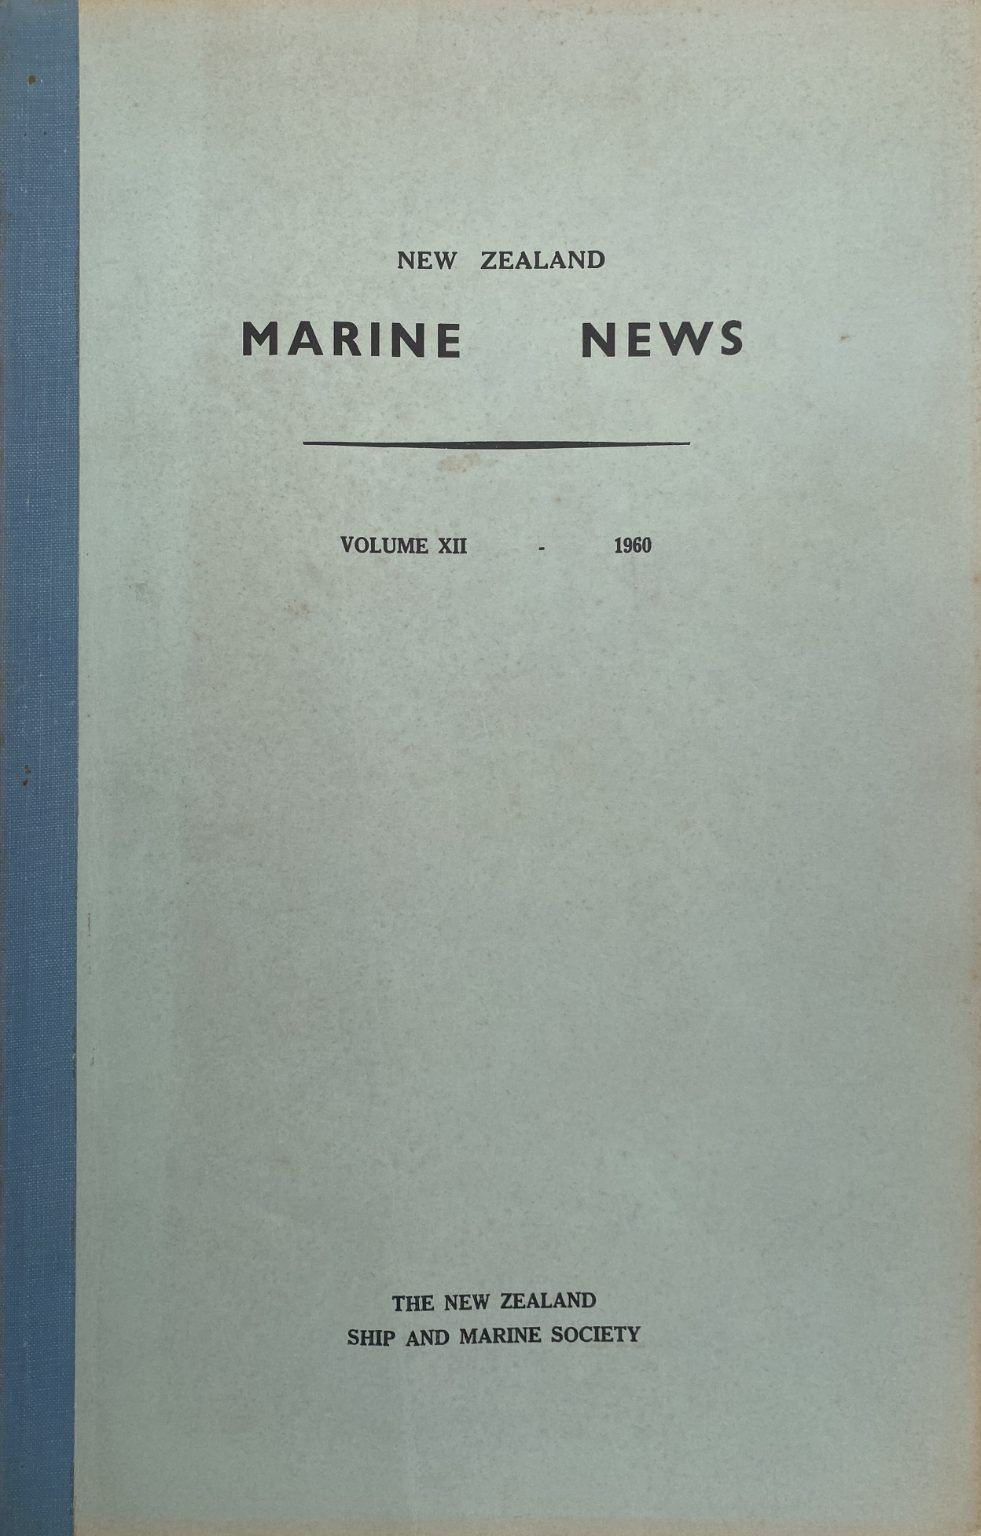 NEW ZEALAND MARINE NEWS: Volume 12, 1960 - 1961